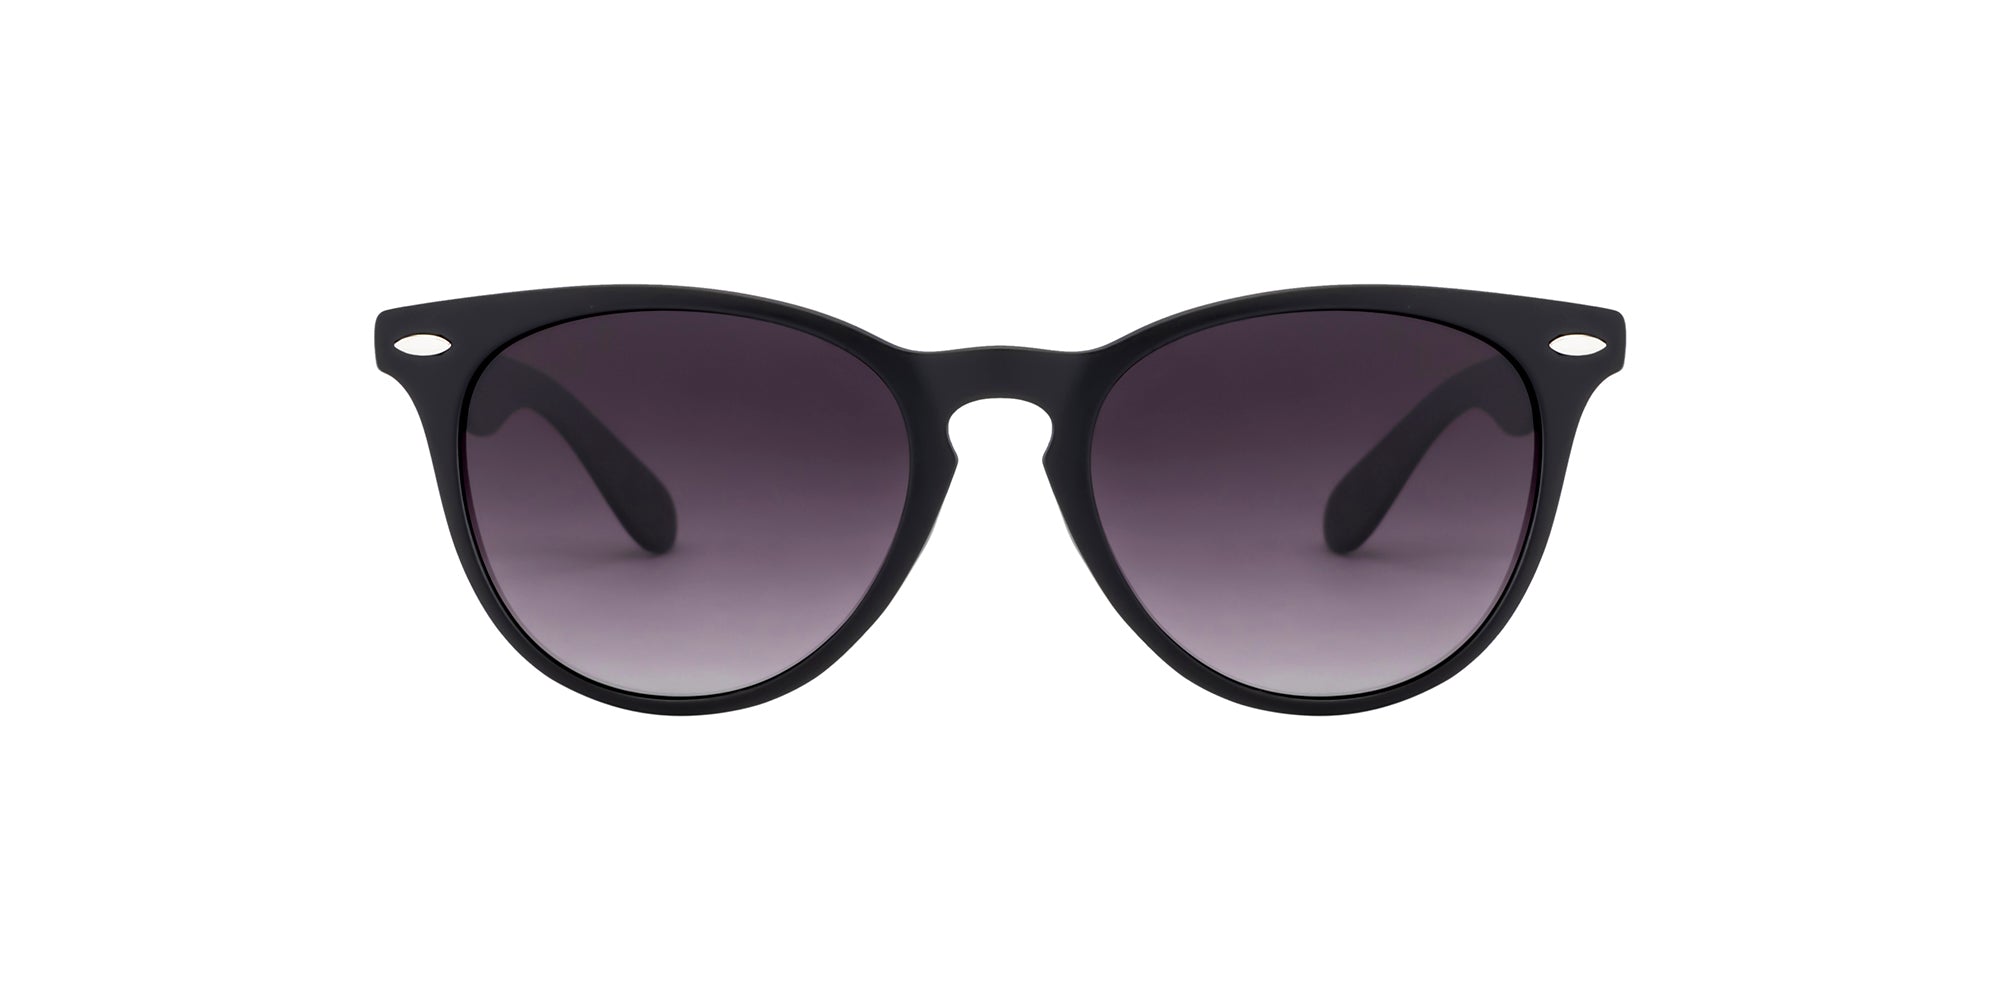 Velocity Sunglasses 1959 Sunglass